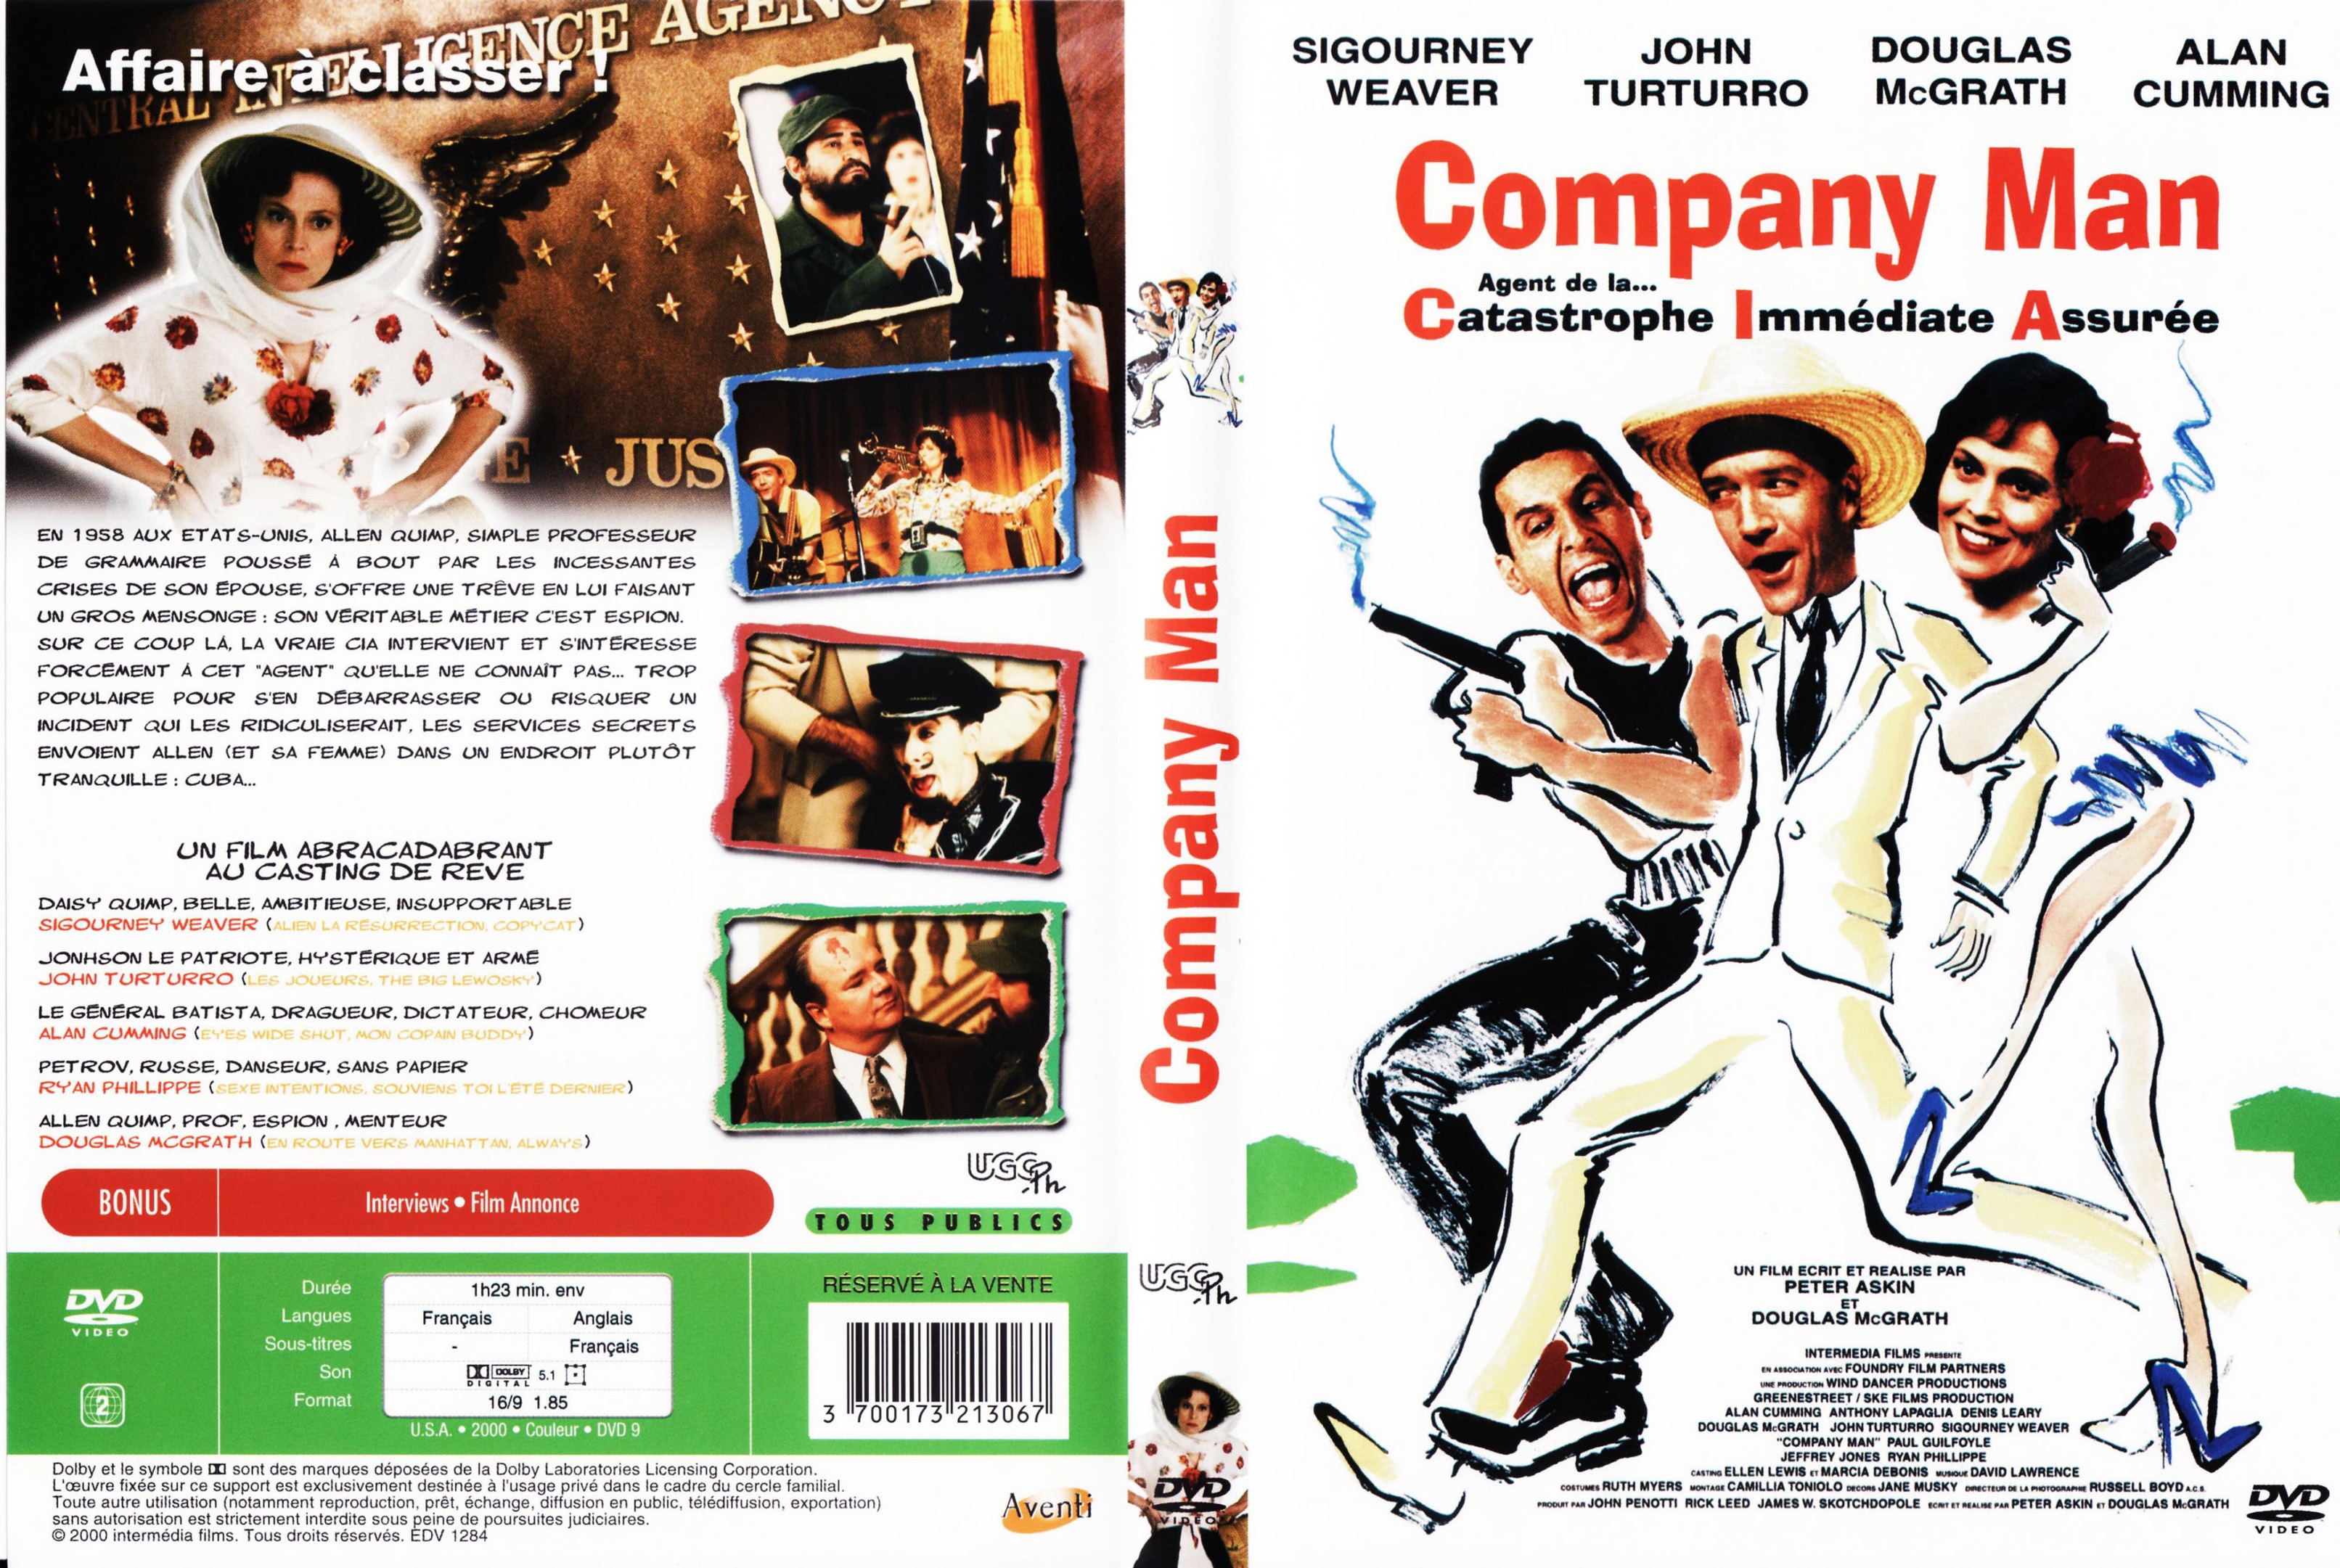 Jaquette DVD Company man v2